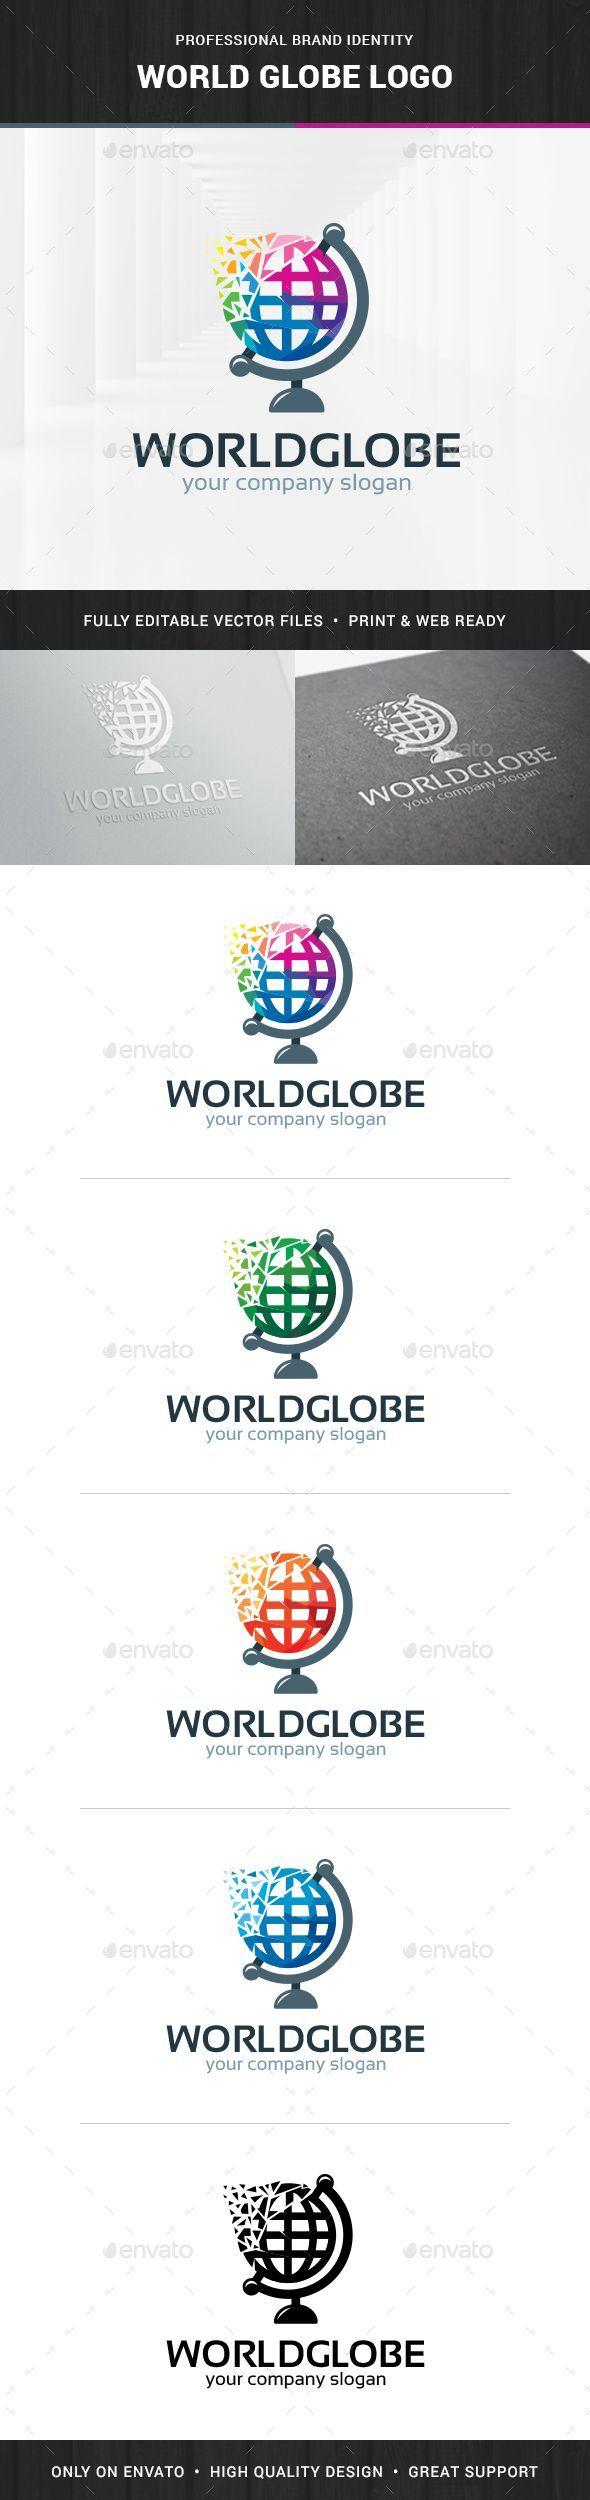 Colorful Globe Logo - The World Globe Logo Template A shattered and colorful globe logo